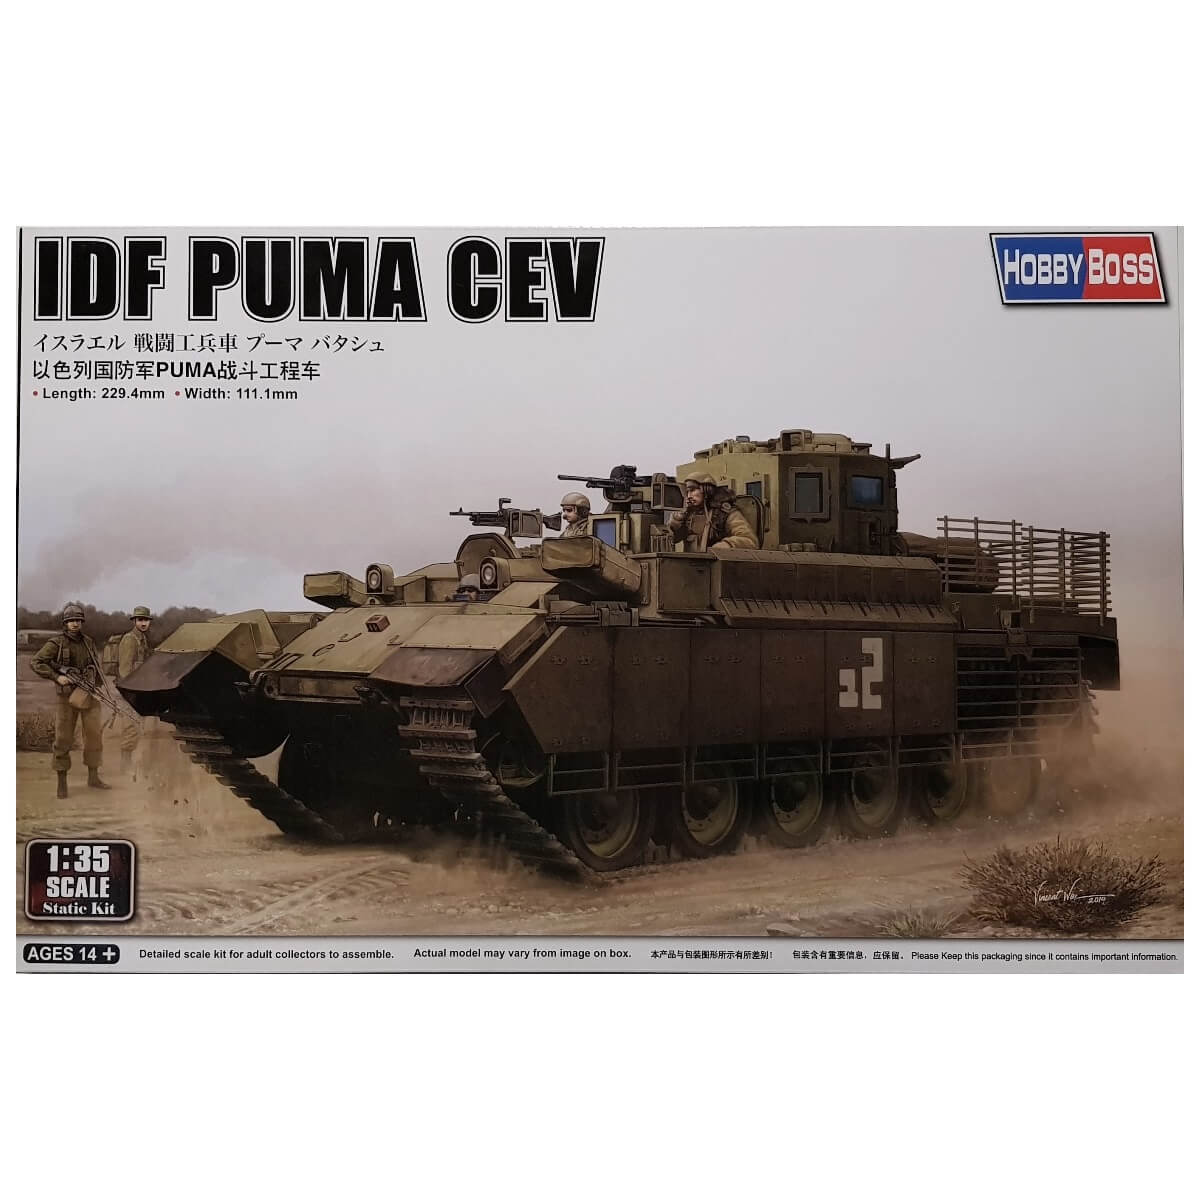 1:35 IDF Puma CEV - HOBBY BOSS